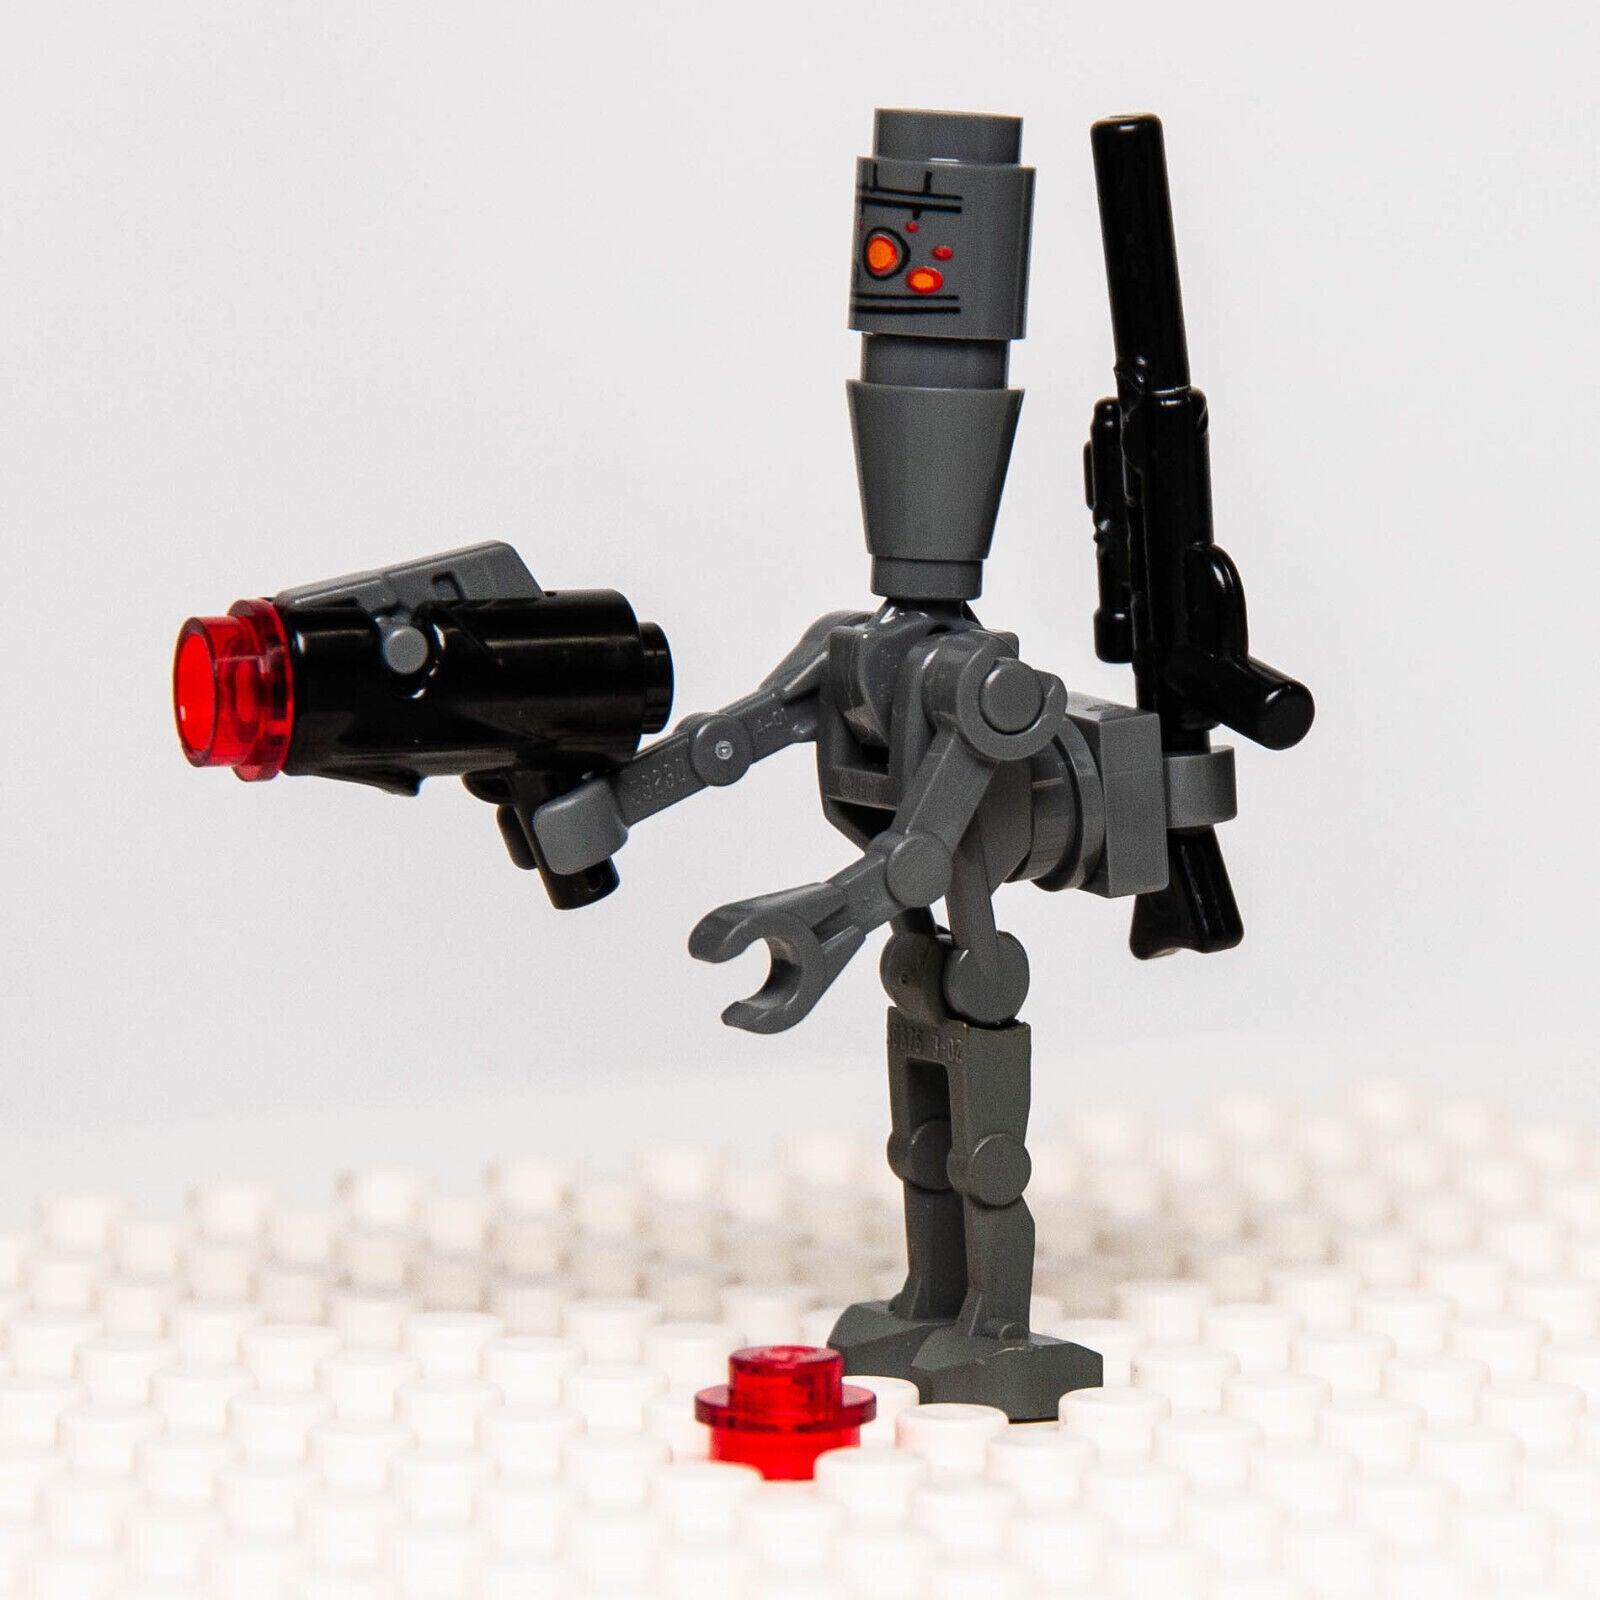 LEGO Star Wars IG-88 Assassin Droid Minifigure (sw0831a) 75167 w/ Guns